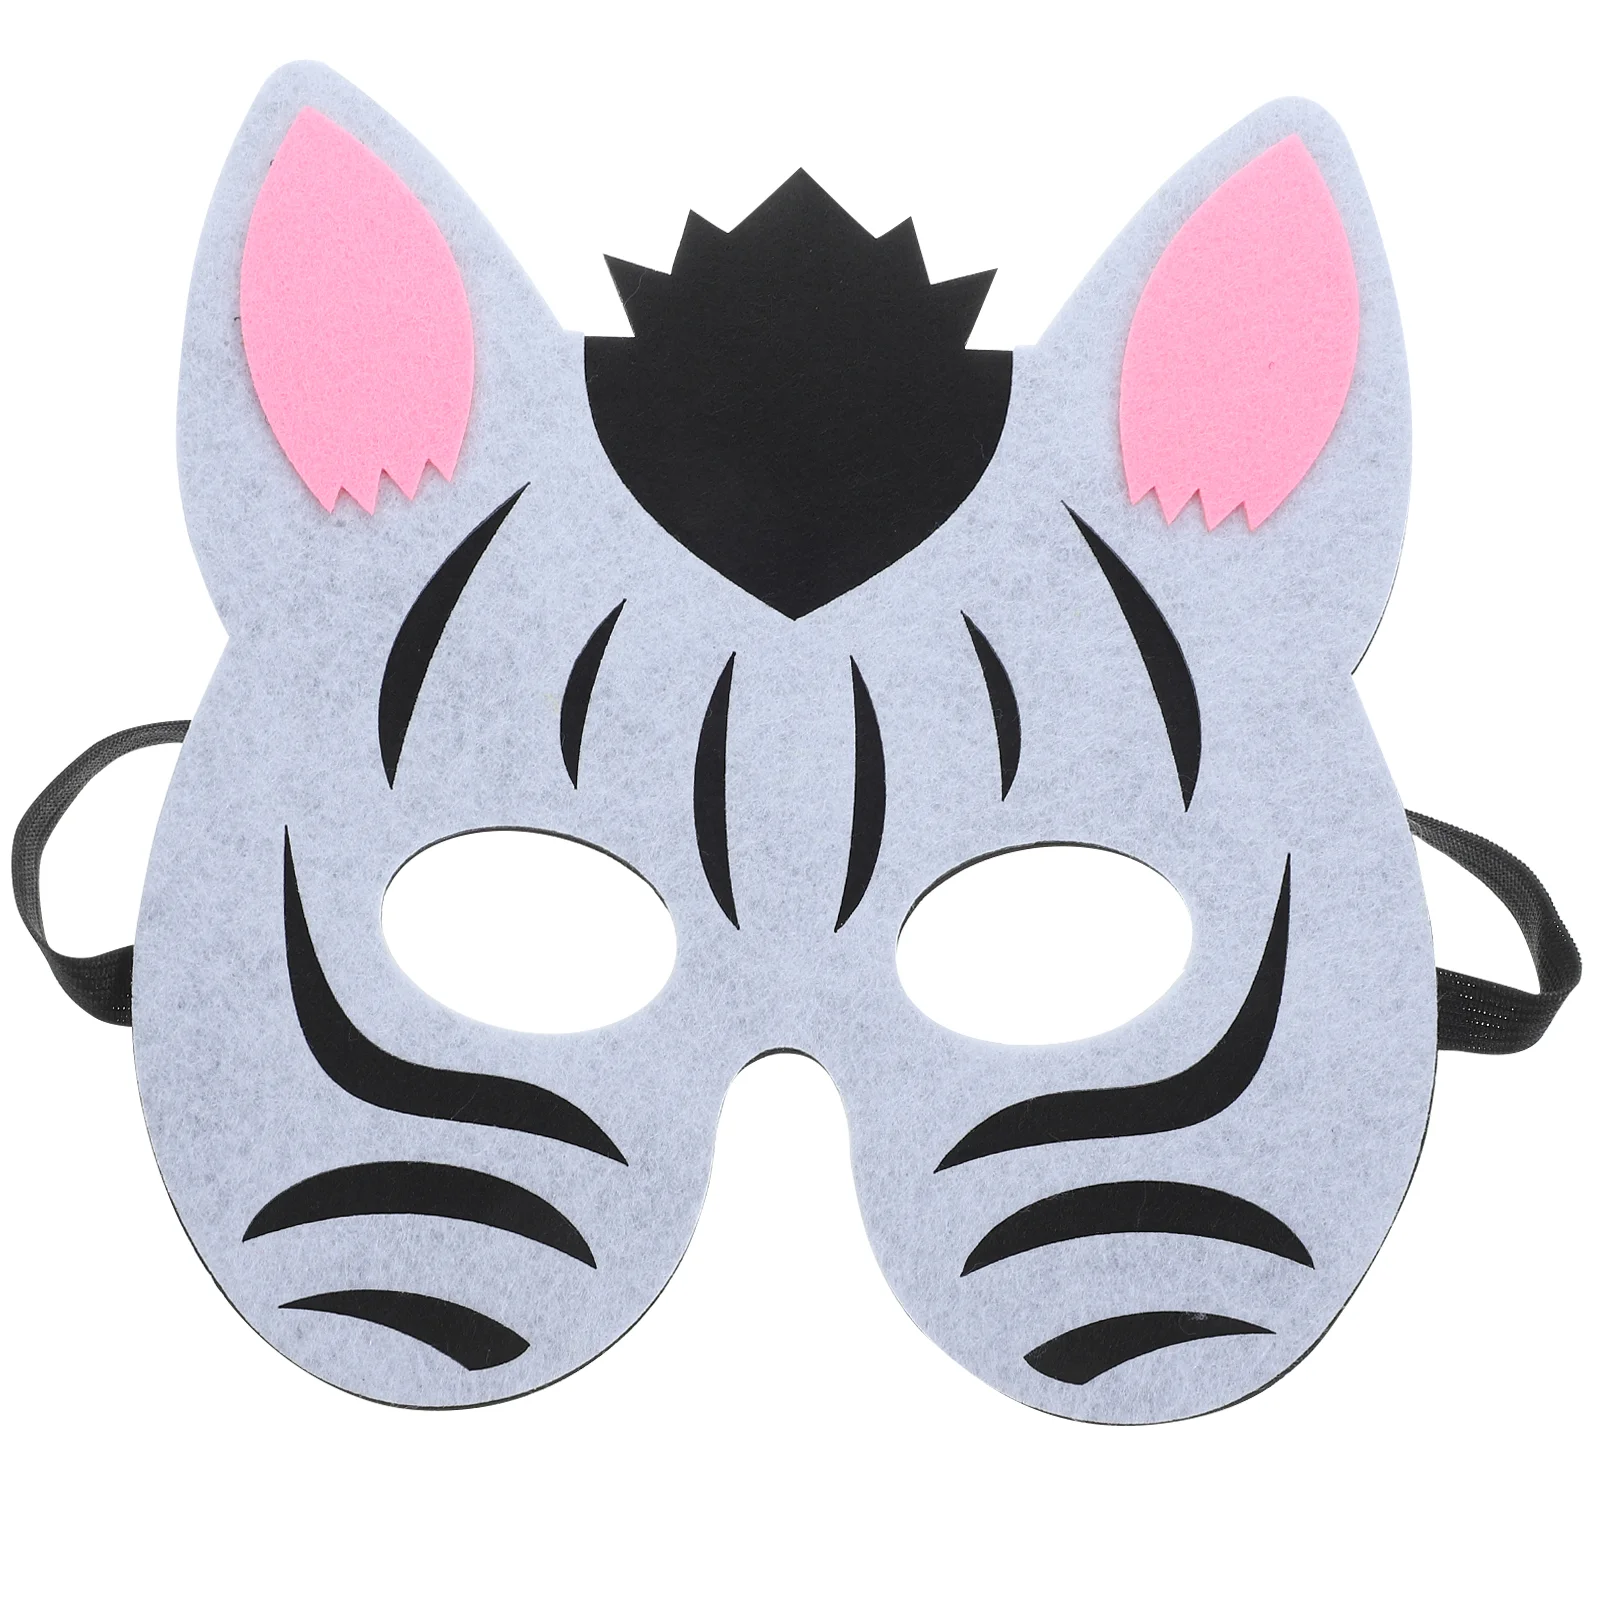 

Zebra Mask Cosplay Party Mask Decorative Animal Mask Funny Mask Masquerade Mask for Kids